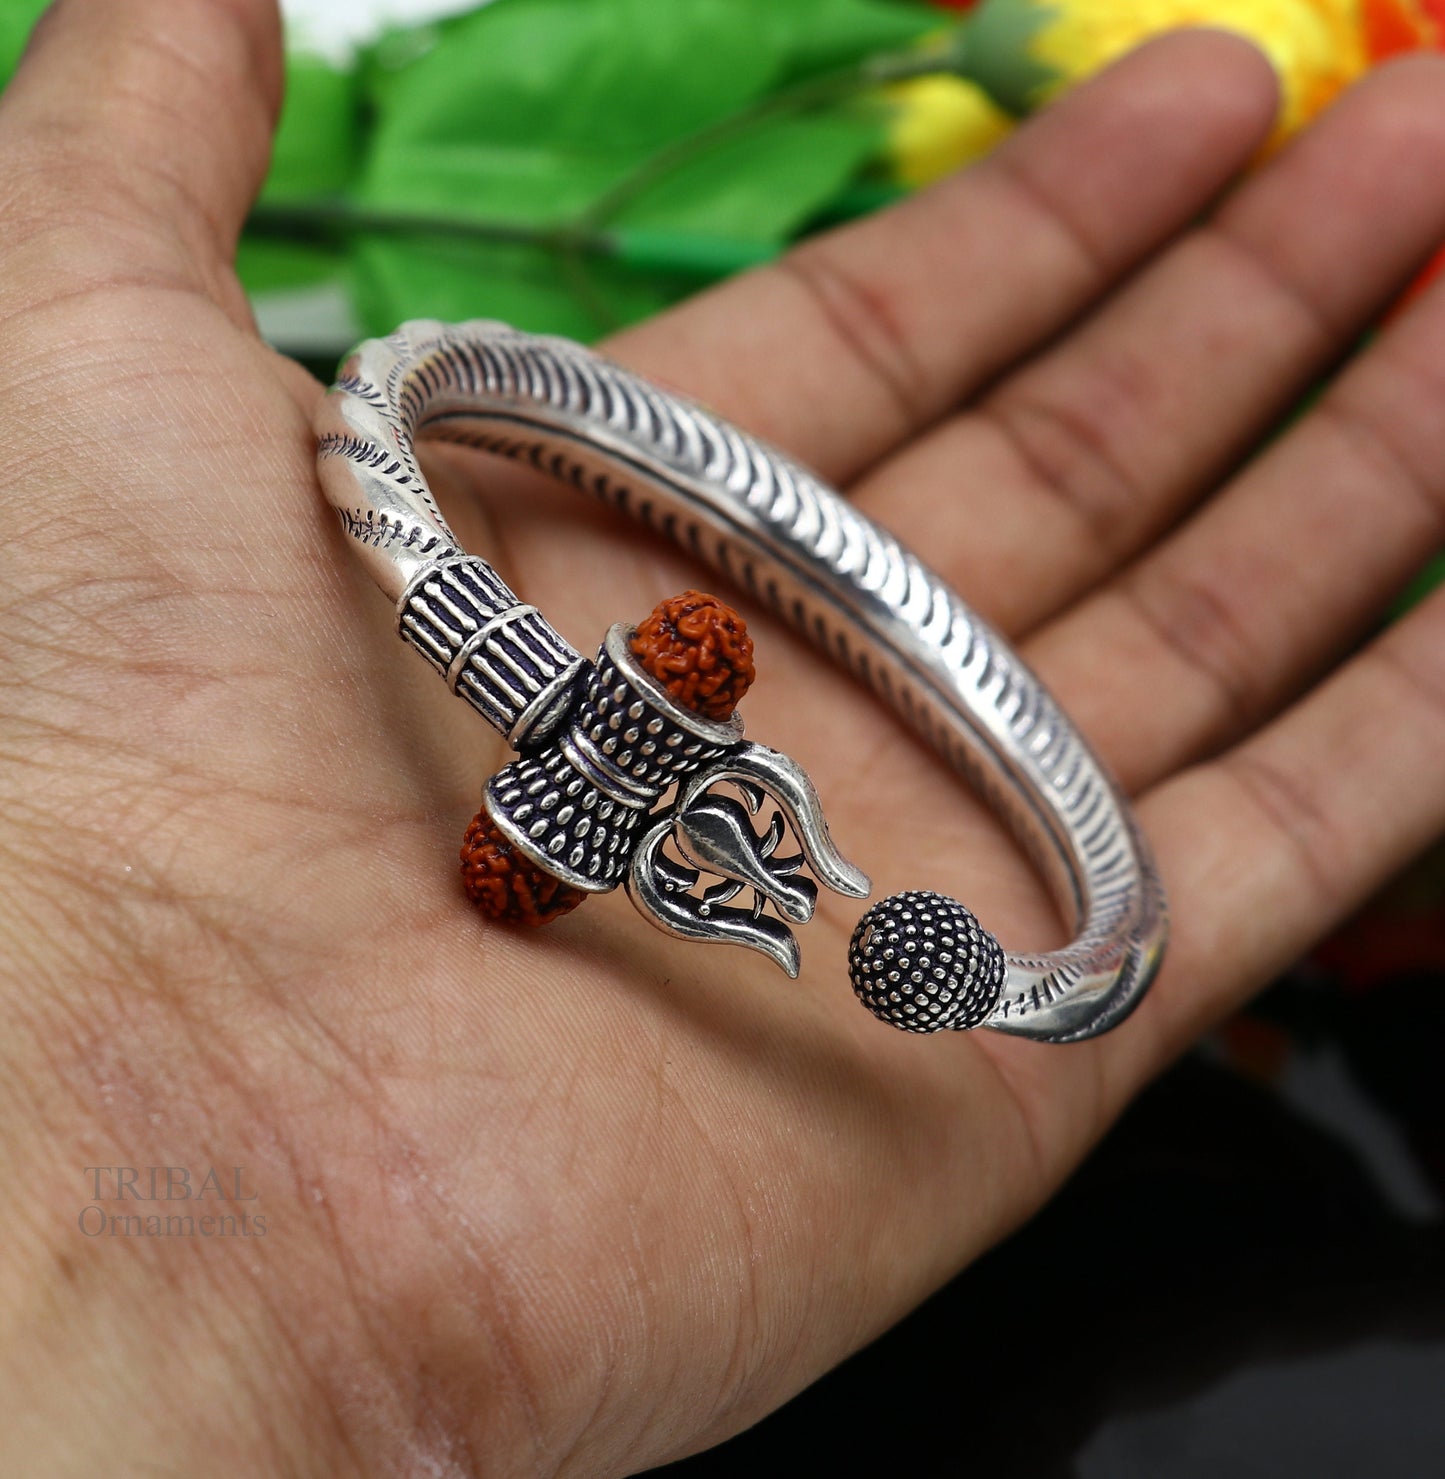 Divine 925 Sterling silver handmade chitai work Lord Shiva trident trishul bangle bracelet natural Rudraksha beads customized kada nsk442 - TRIBAL ORNAMENTS